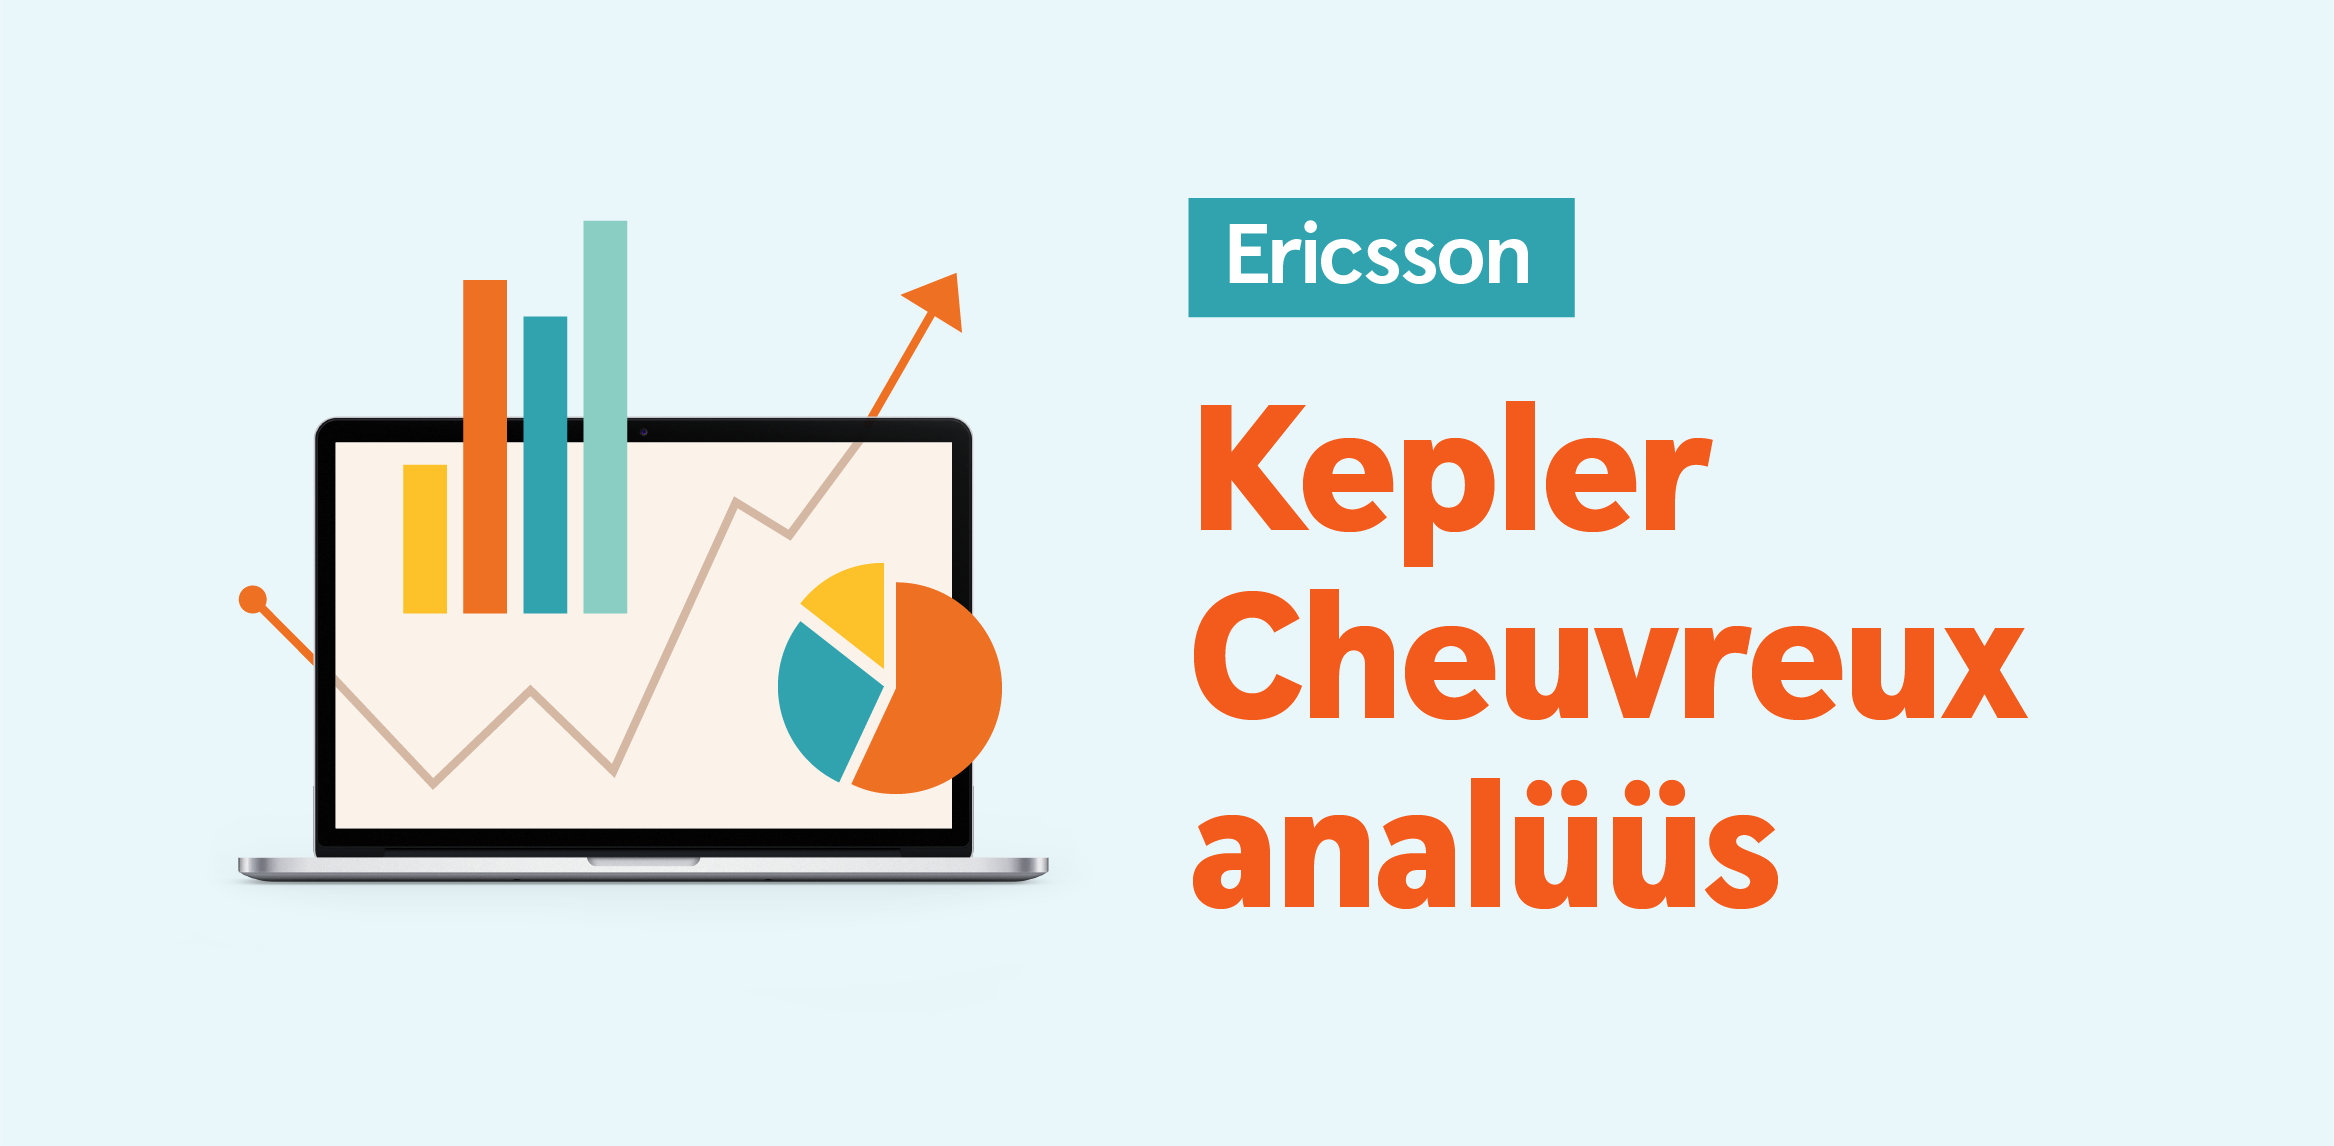 Kepler Cheuvreux langetas Ericssoni aktsia hinnasihti